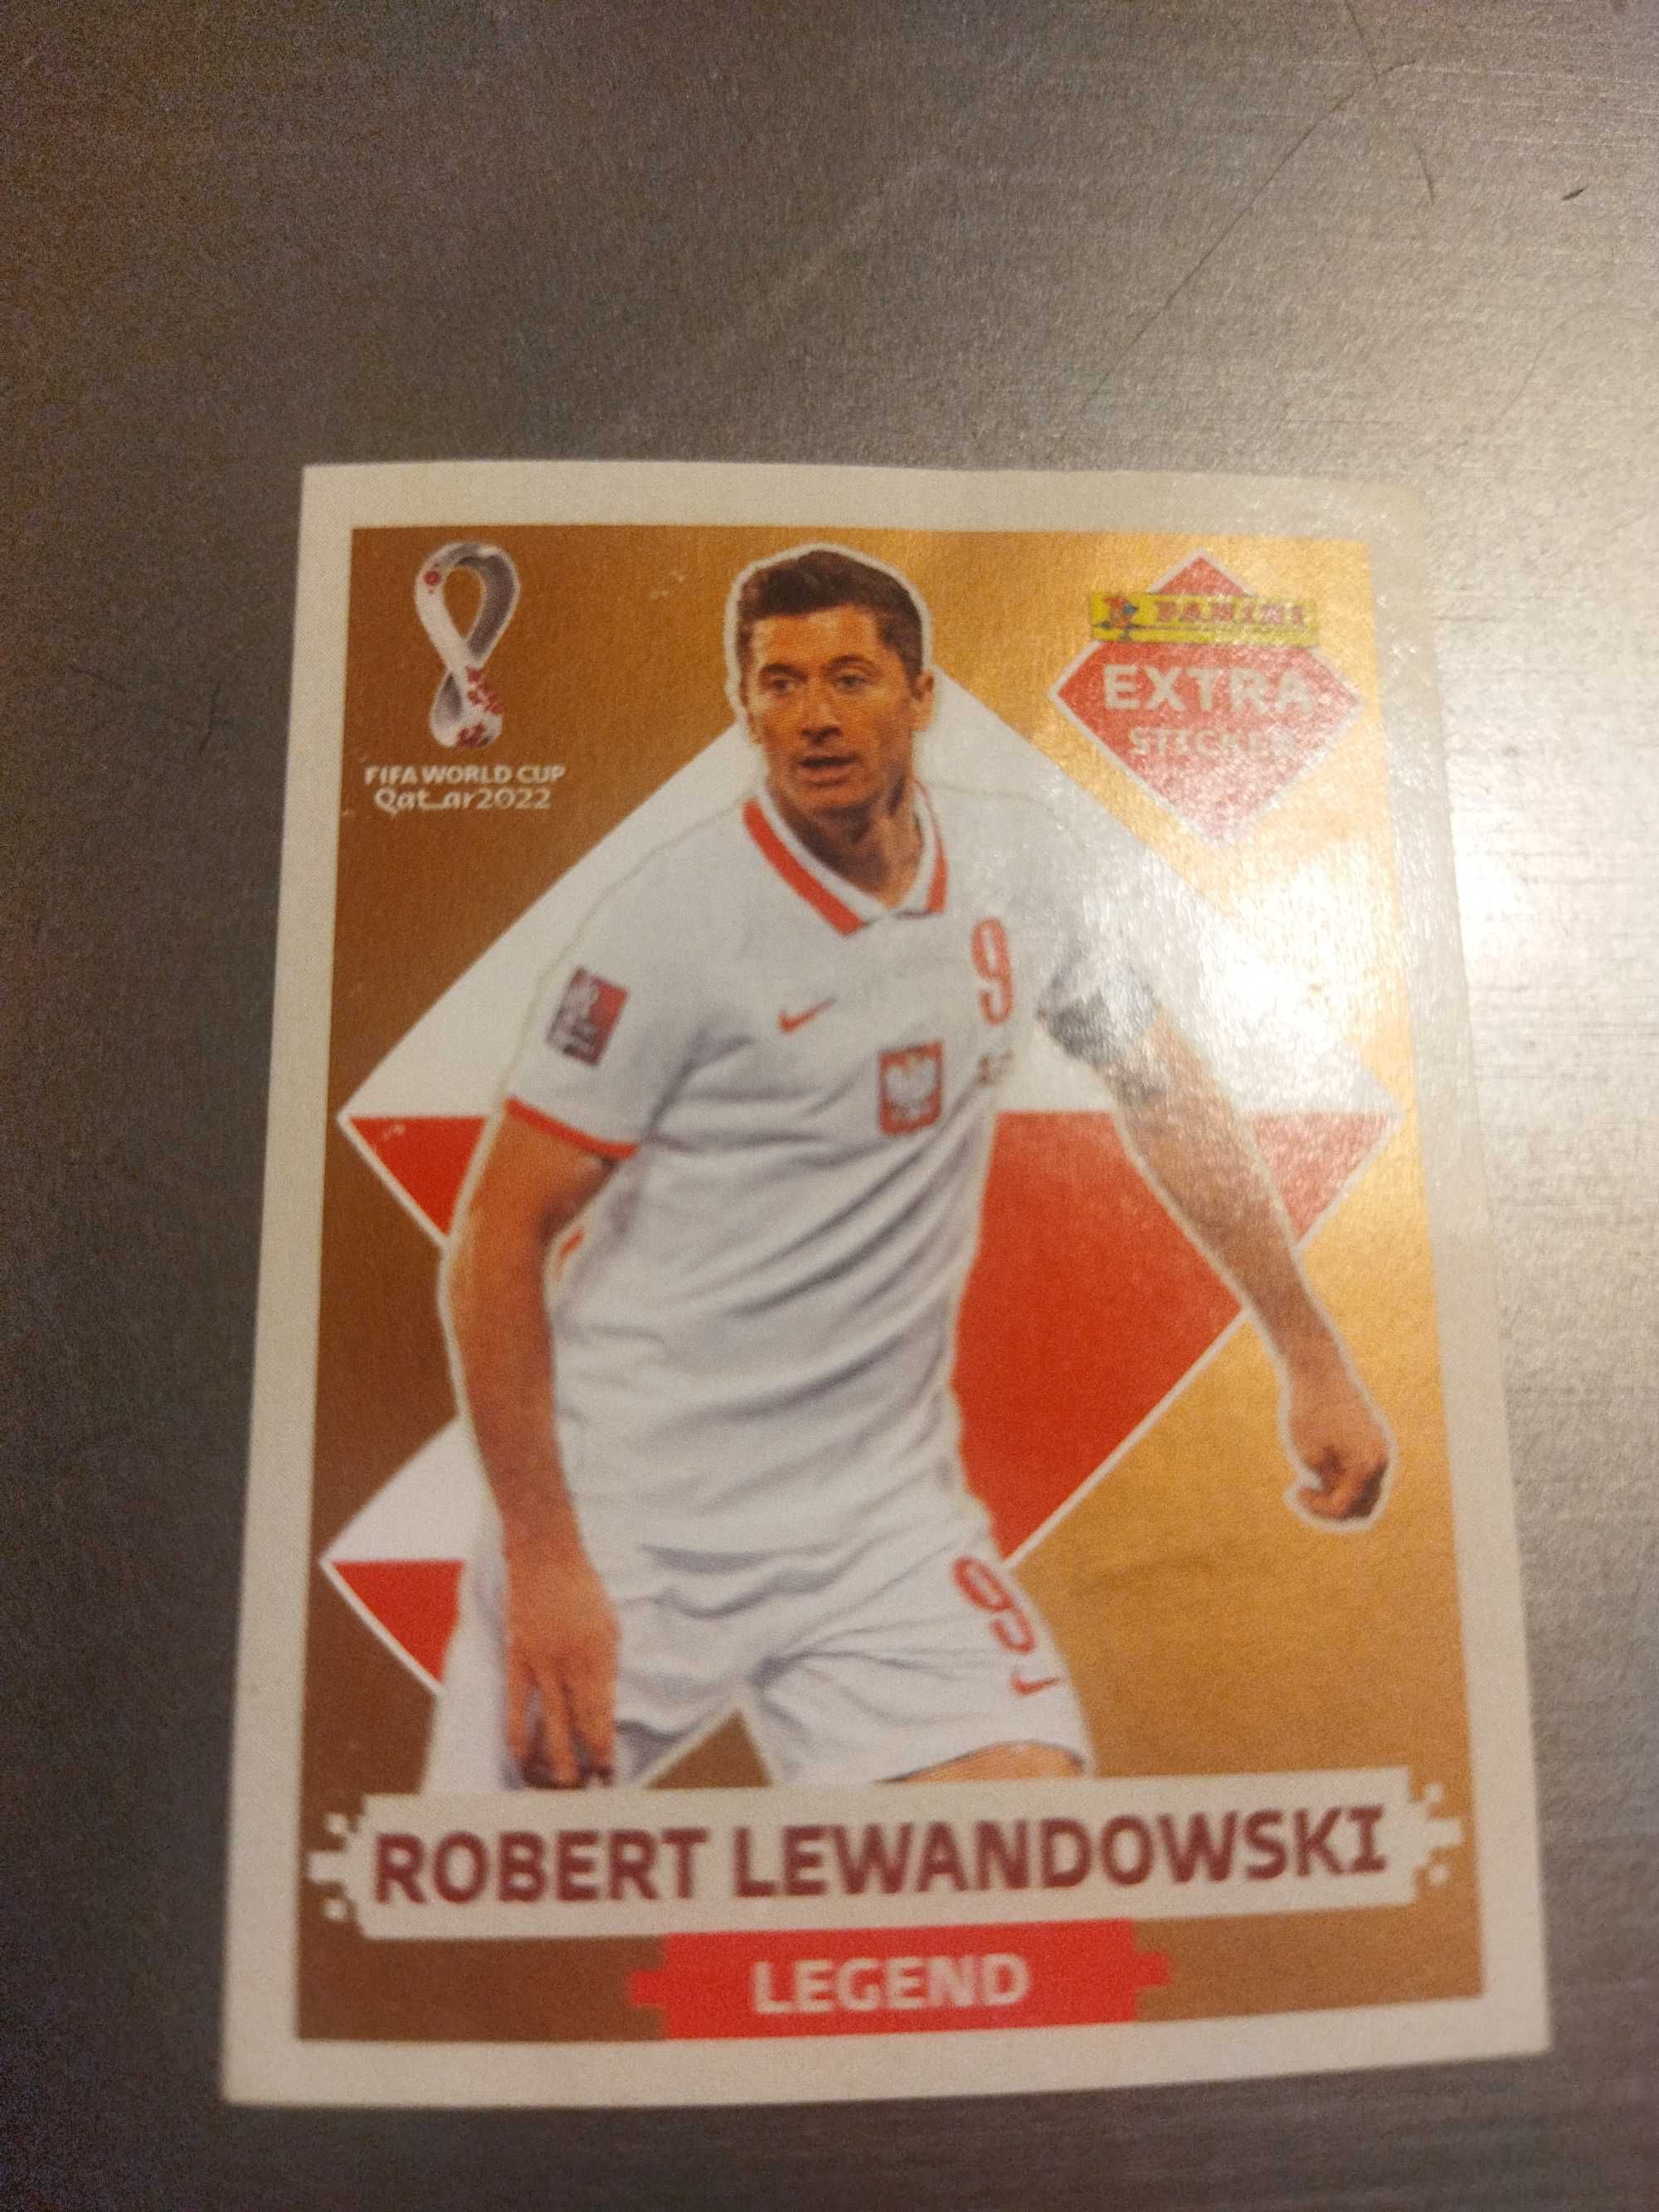 Cromo do Mundial Lewandowski Legend Bronze